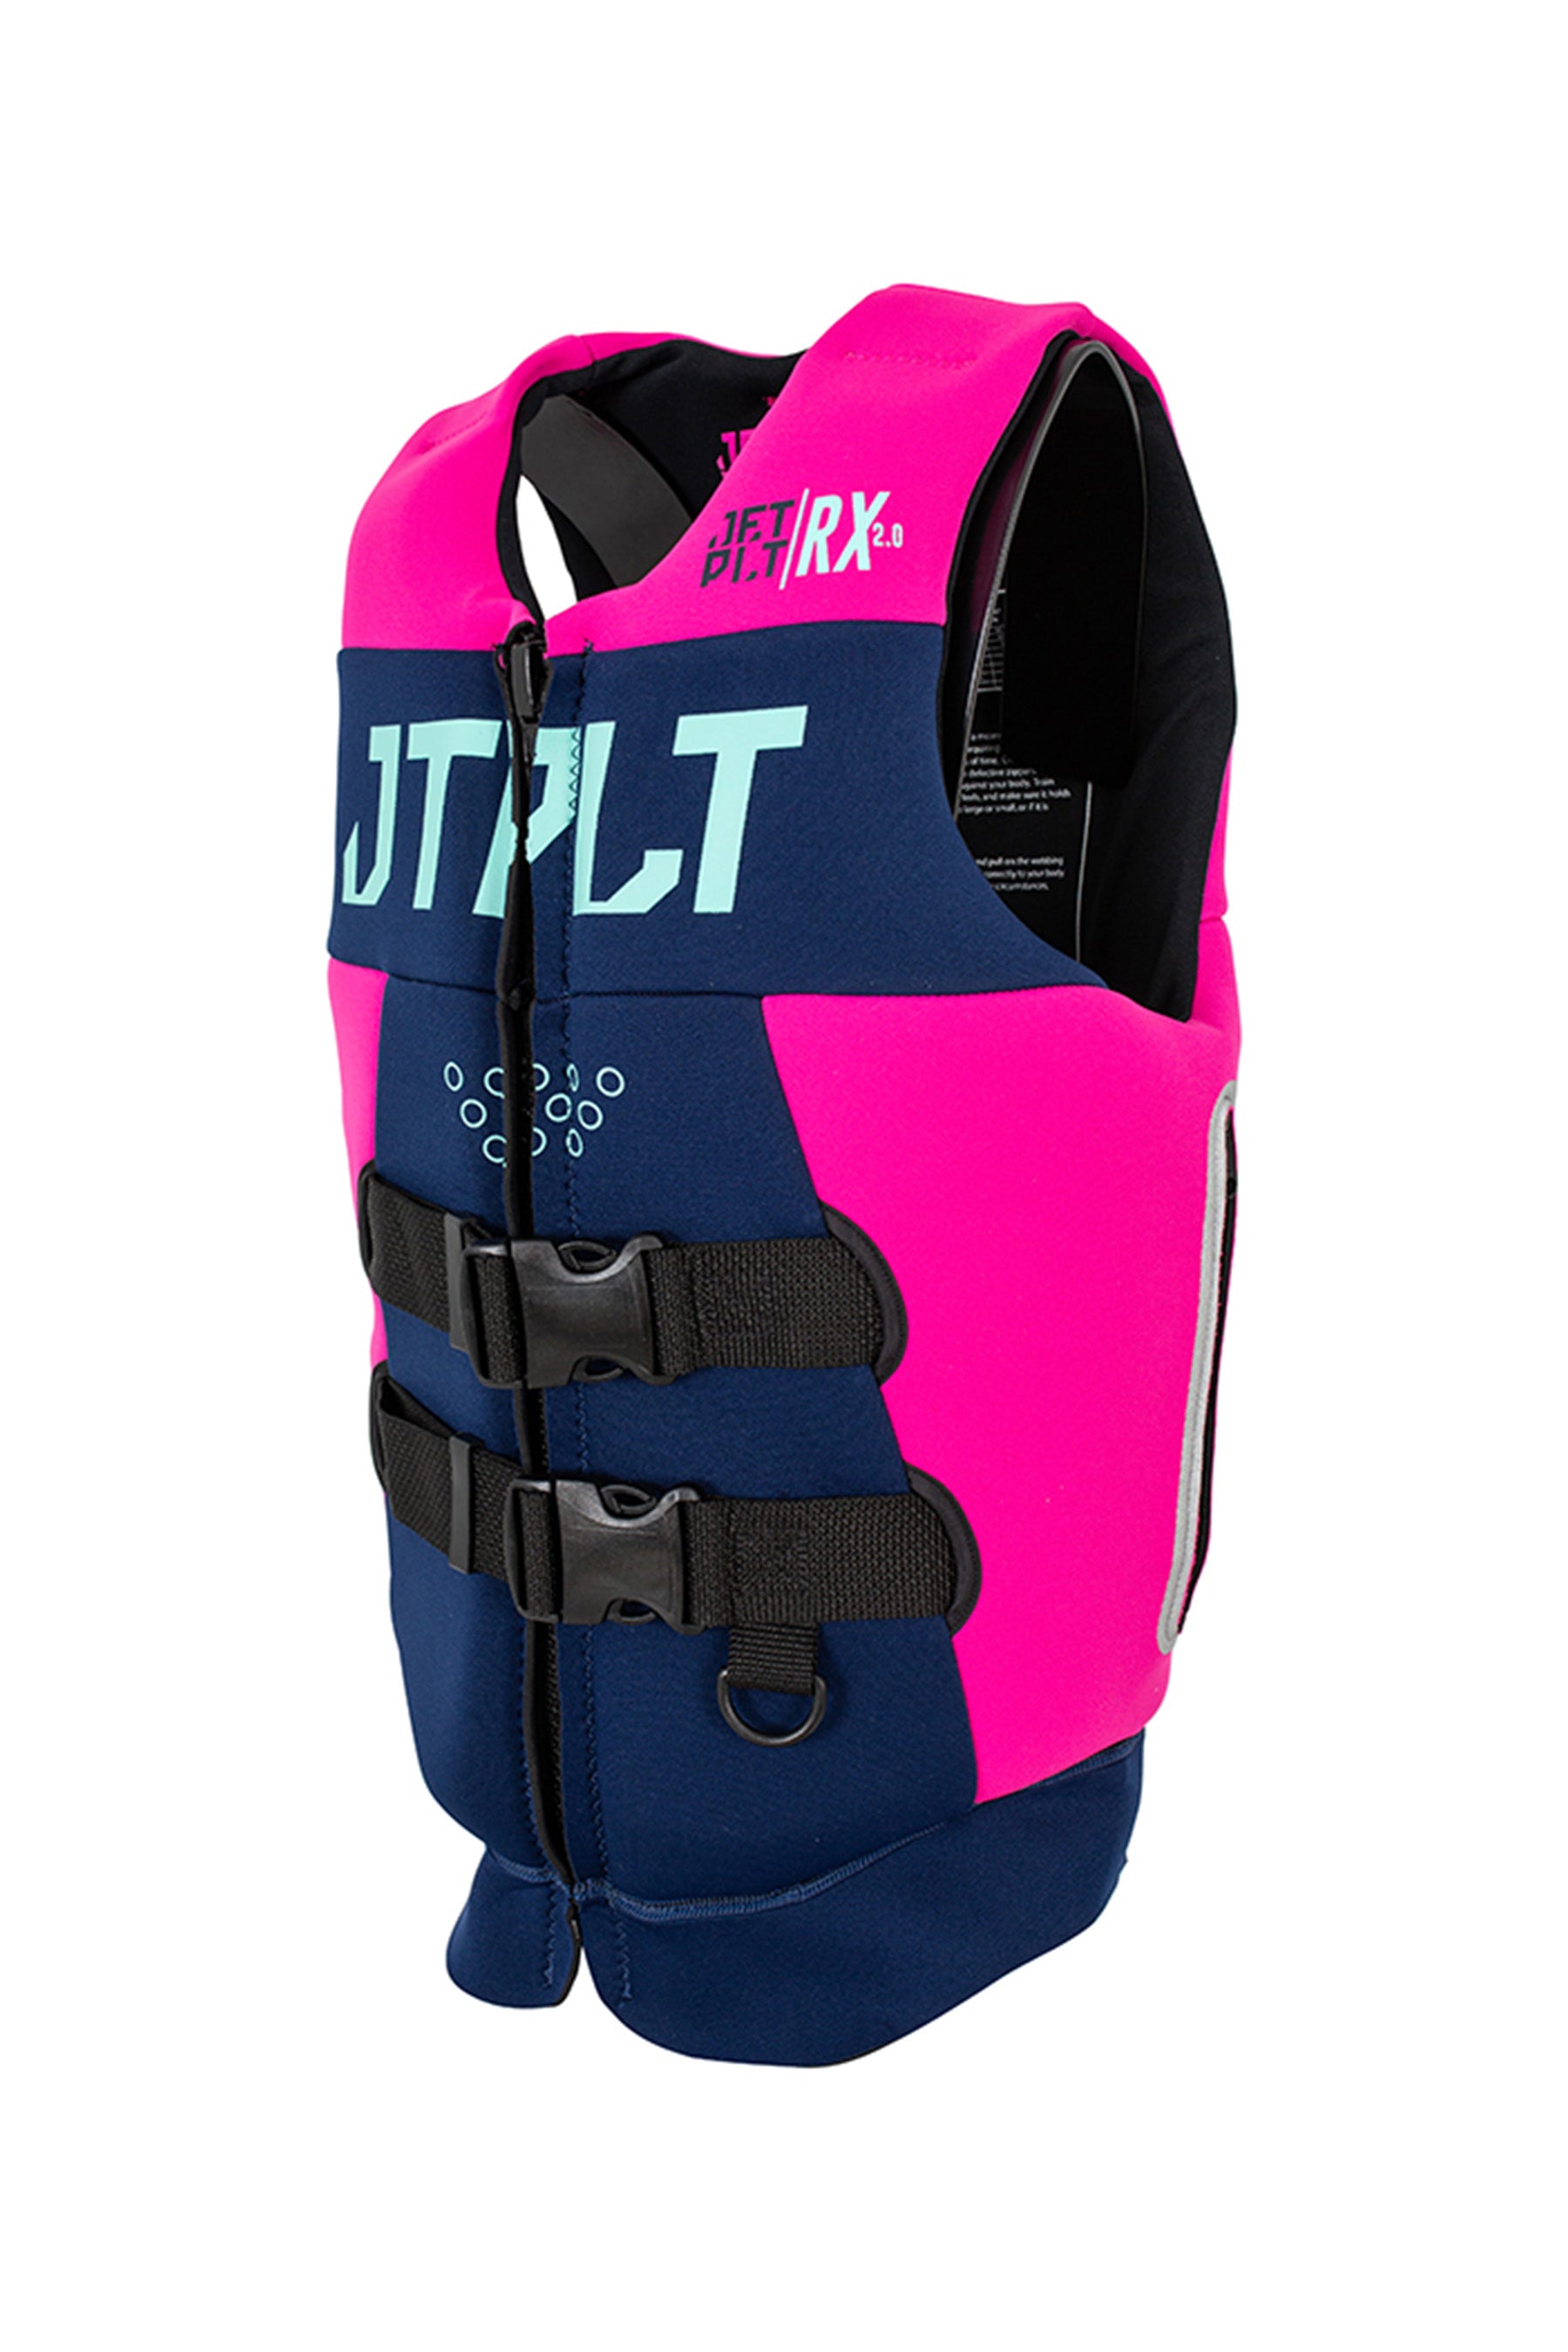 Jetpilot Rx Ladies Life Jacket - Navy/Pink 2